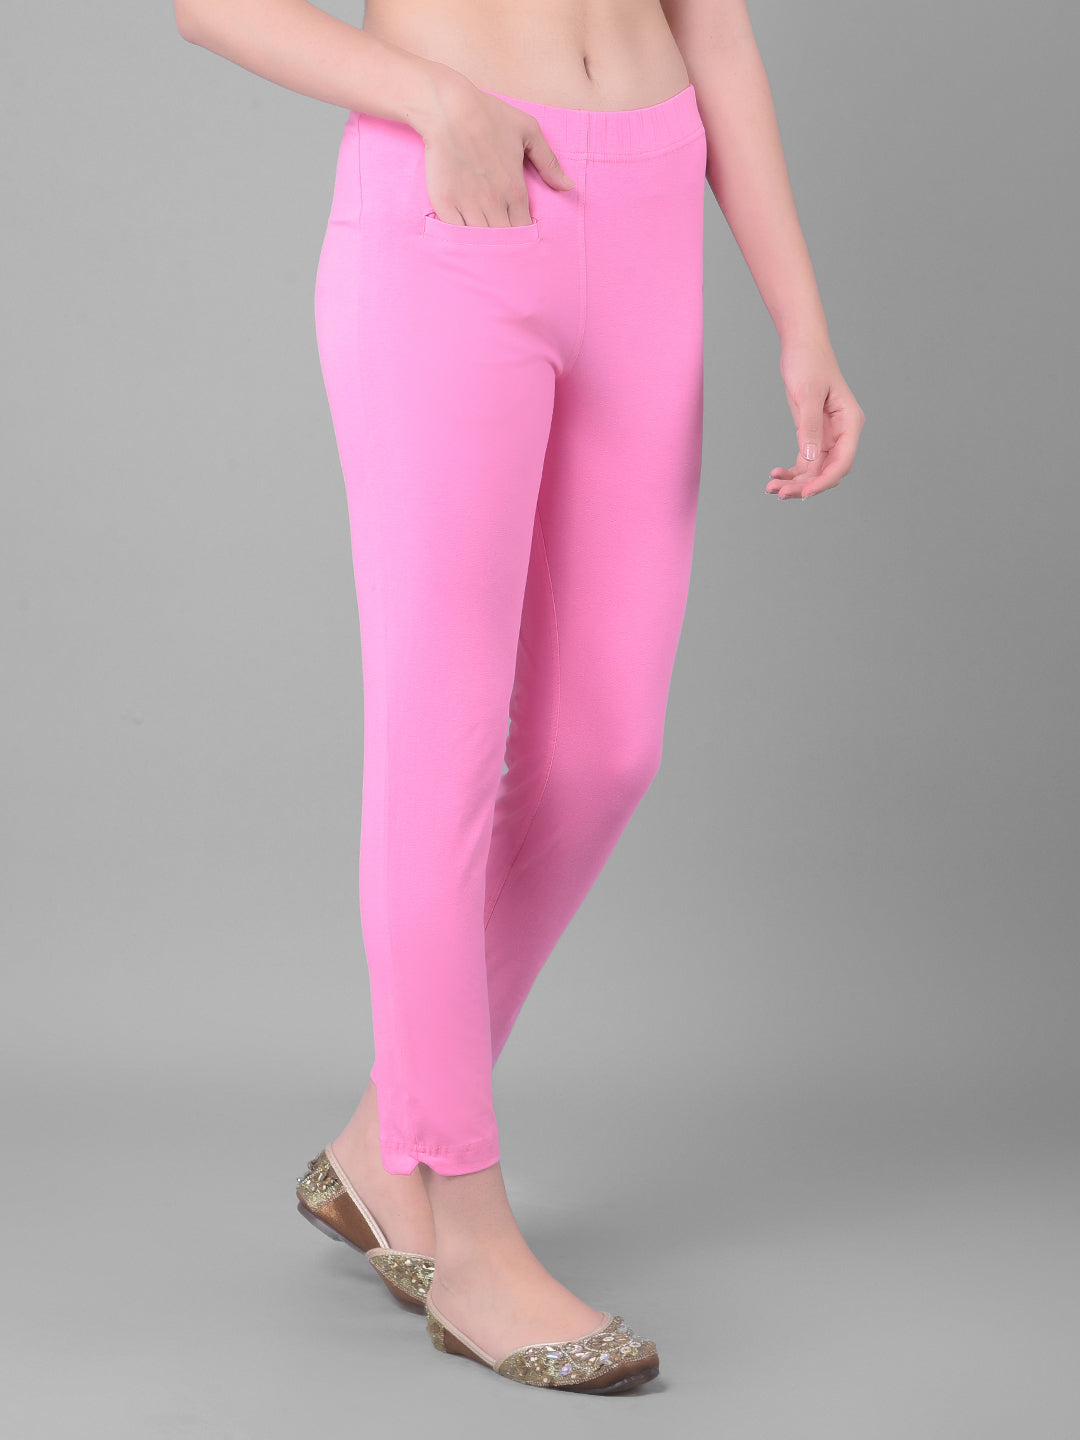 Beautiful Plain Good Looking Pink Cotton Kurti Free White Legging Bottom  Dresses | eBay